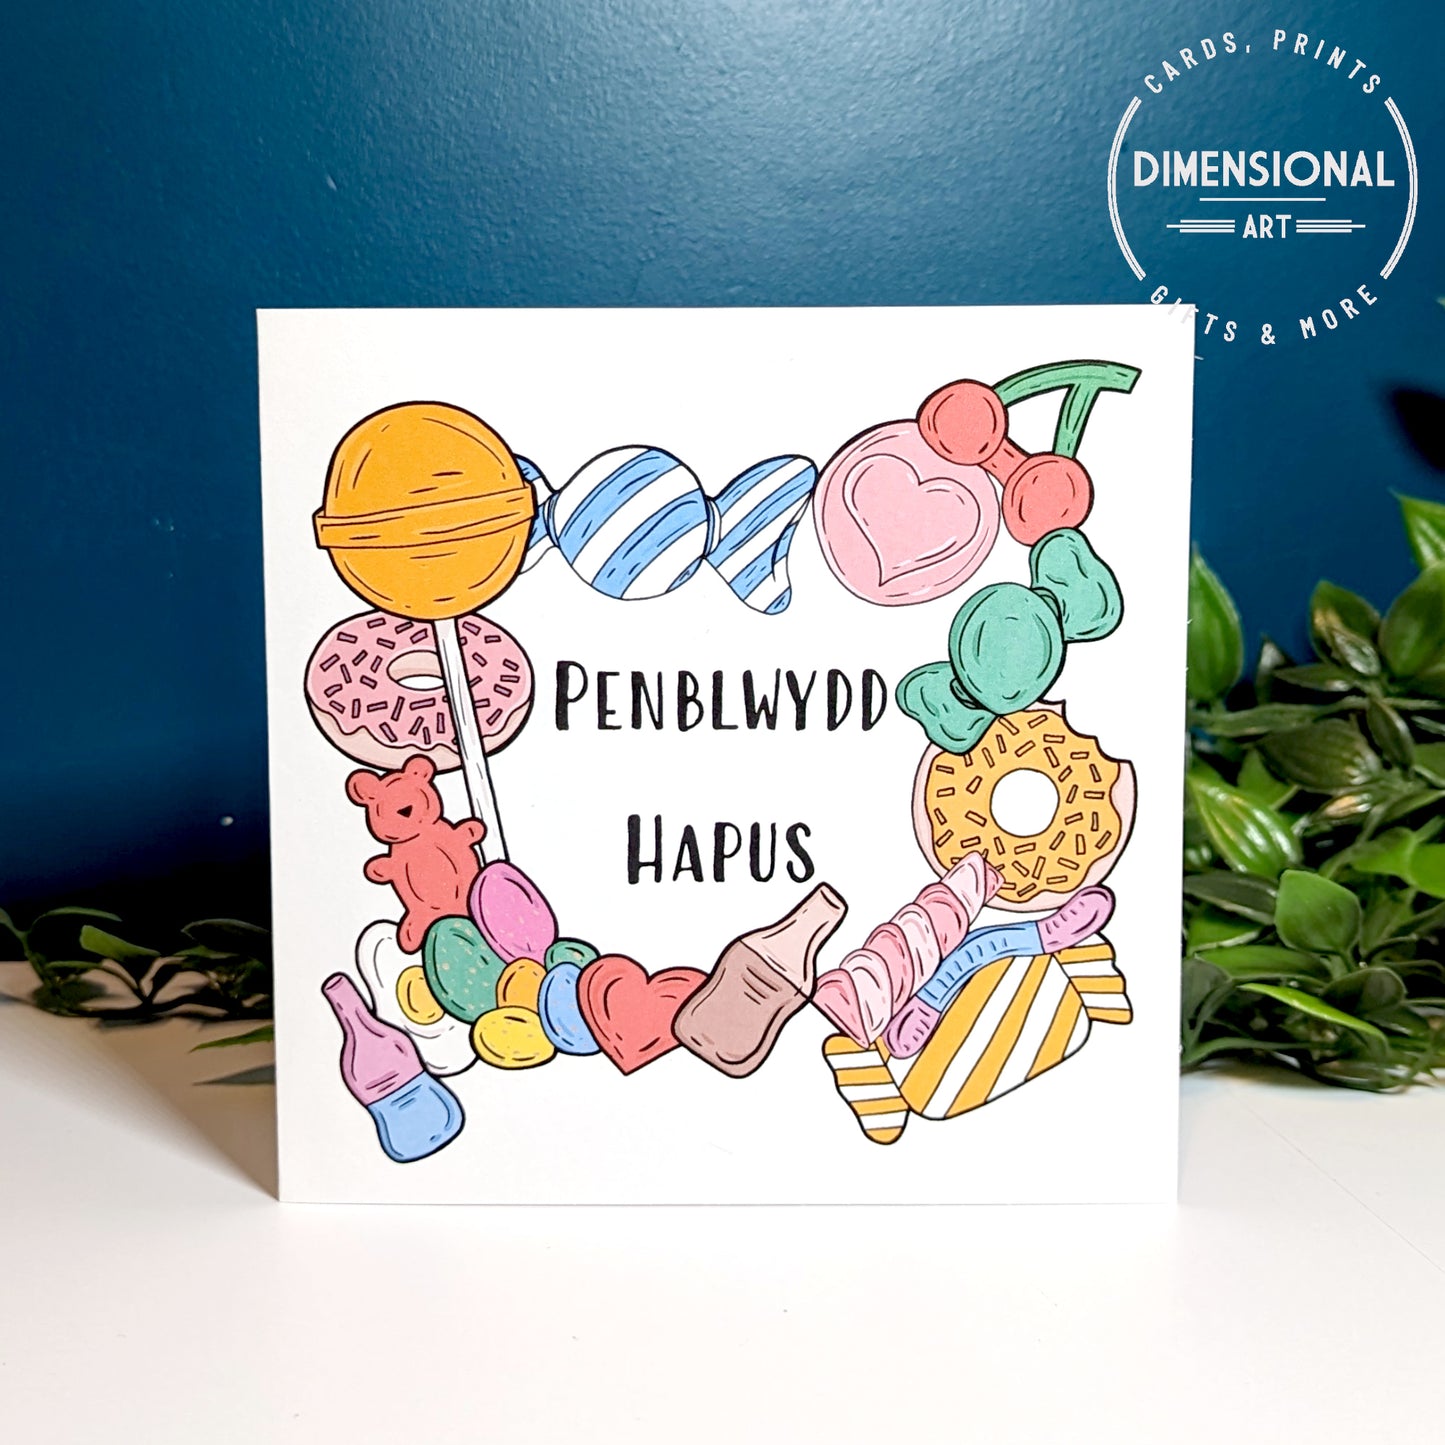 Sweets candy - Penblwydd Hapus (Birthday Card) Welsh Card